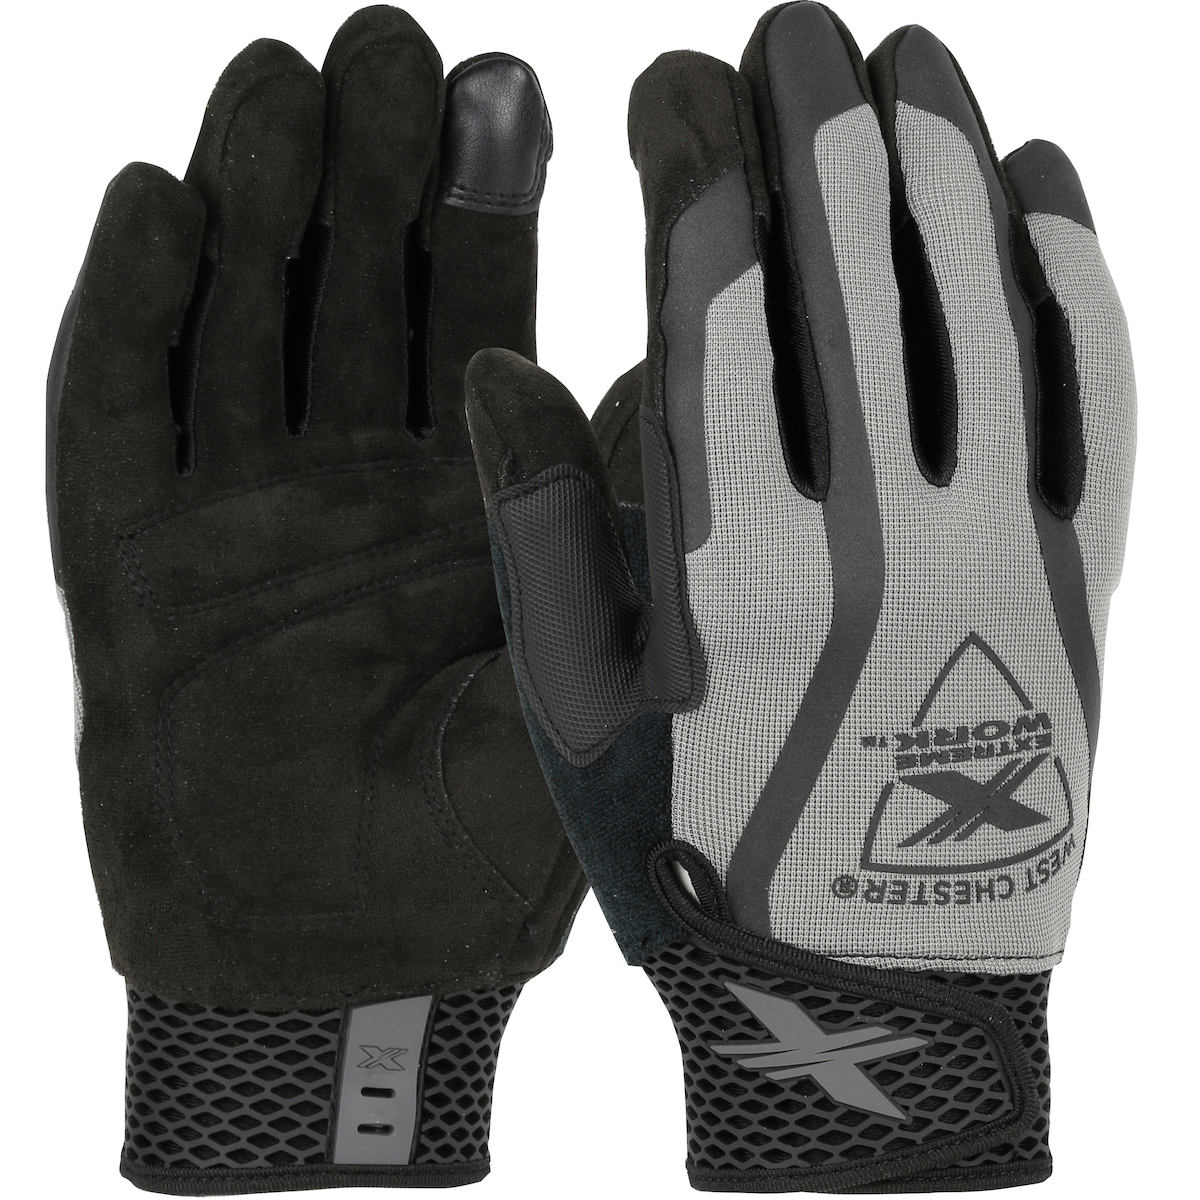 89301 PIP® West Chester Extreme Work® Multi-leX™ General Purpose Work Gloves